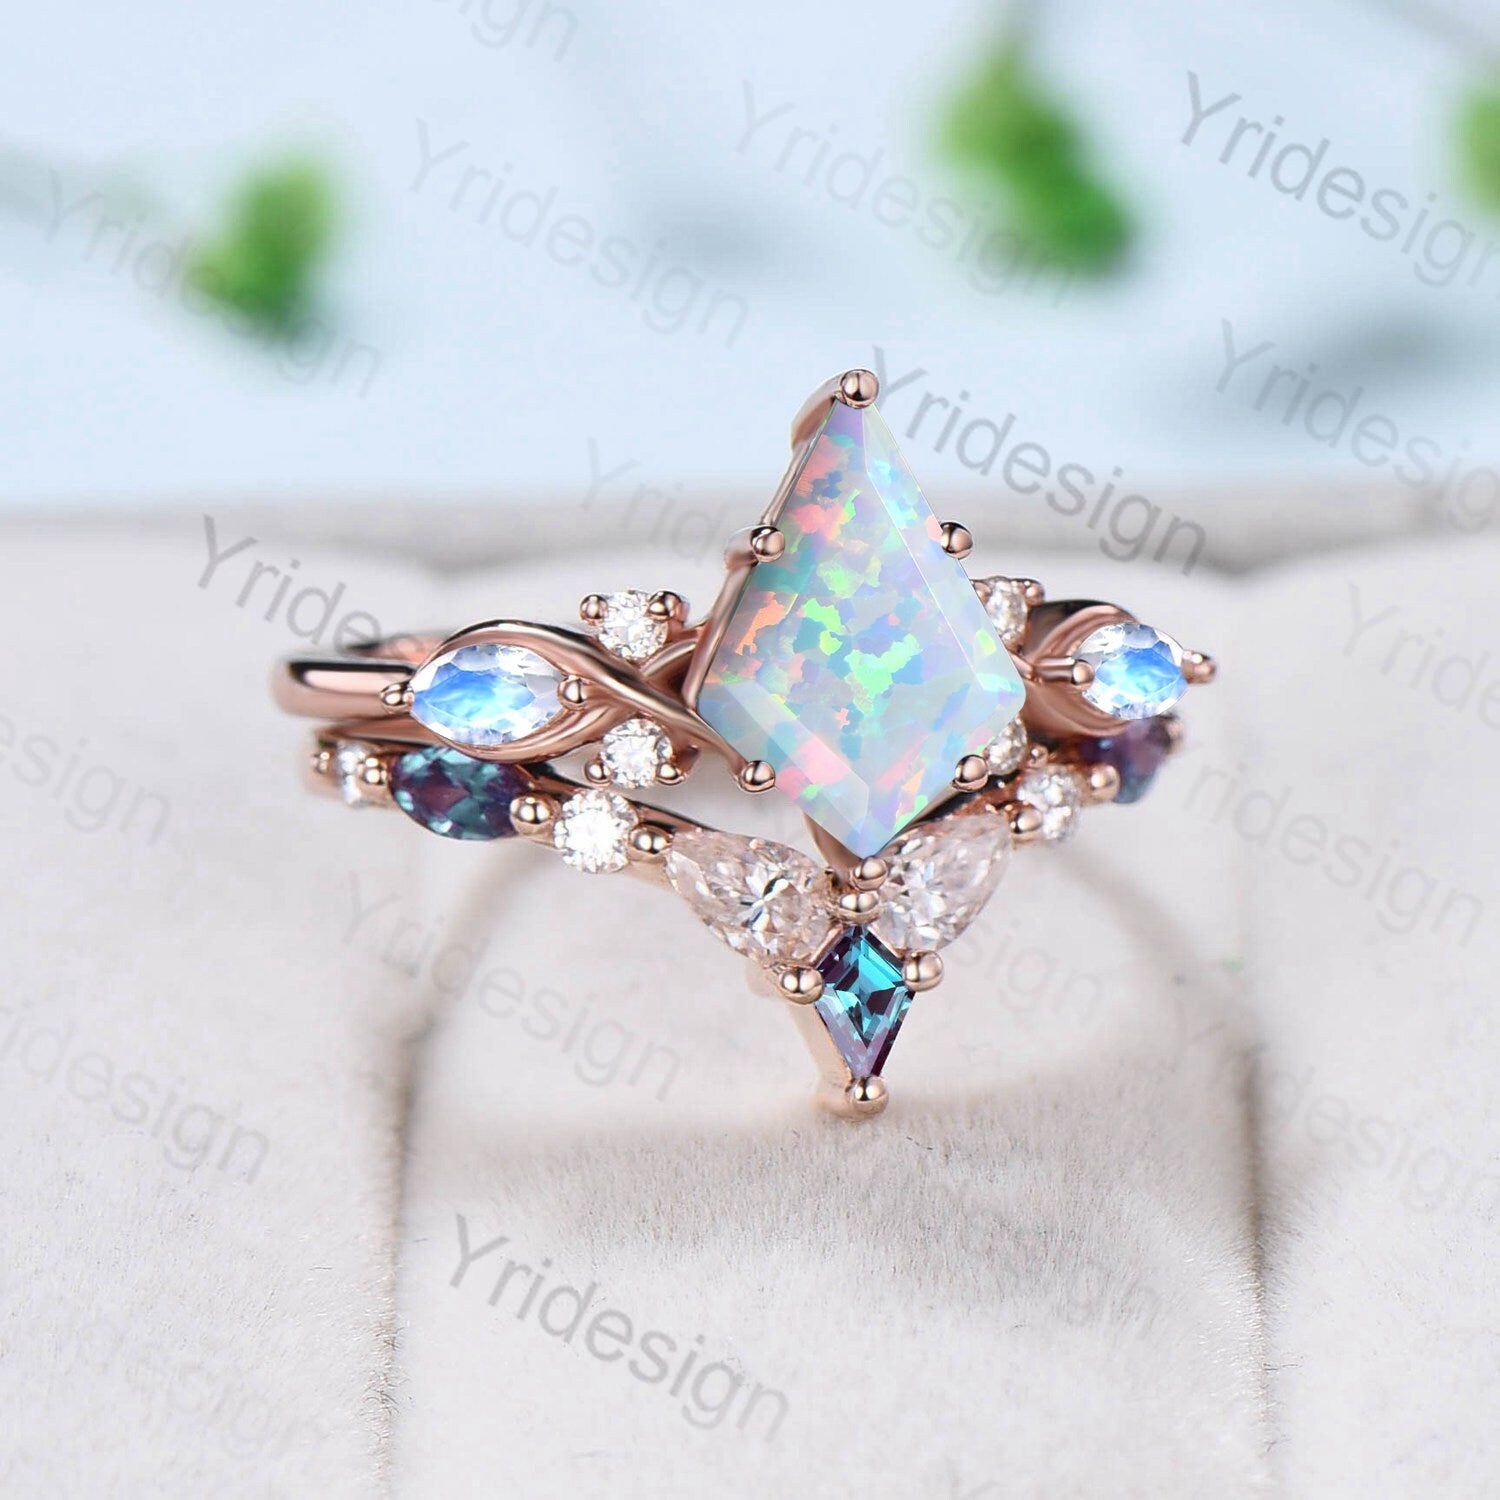 Vintage opal ring set 7x10mm kite white opal engagement ring marquise Moonstone wedding ring set unique alexandrite moissanite bridal set - PENFINE